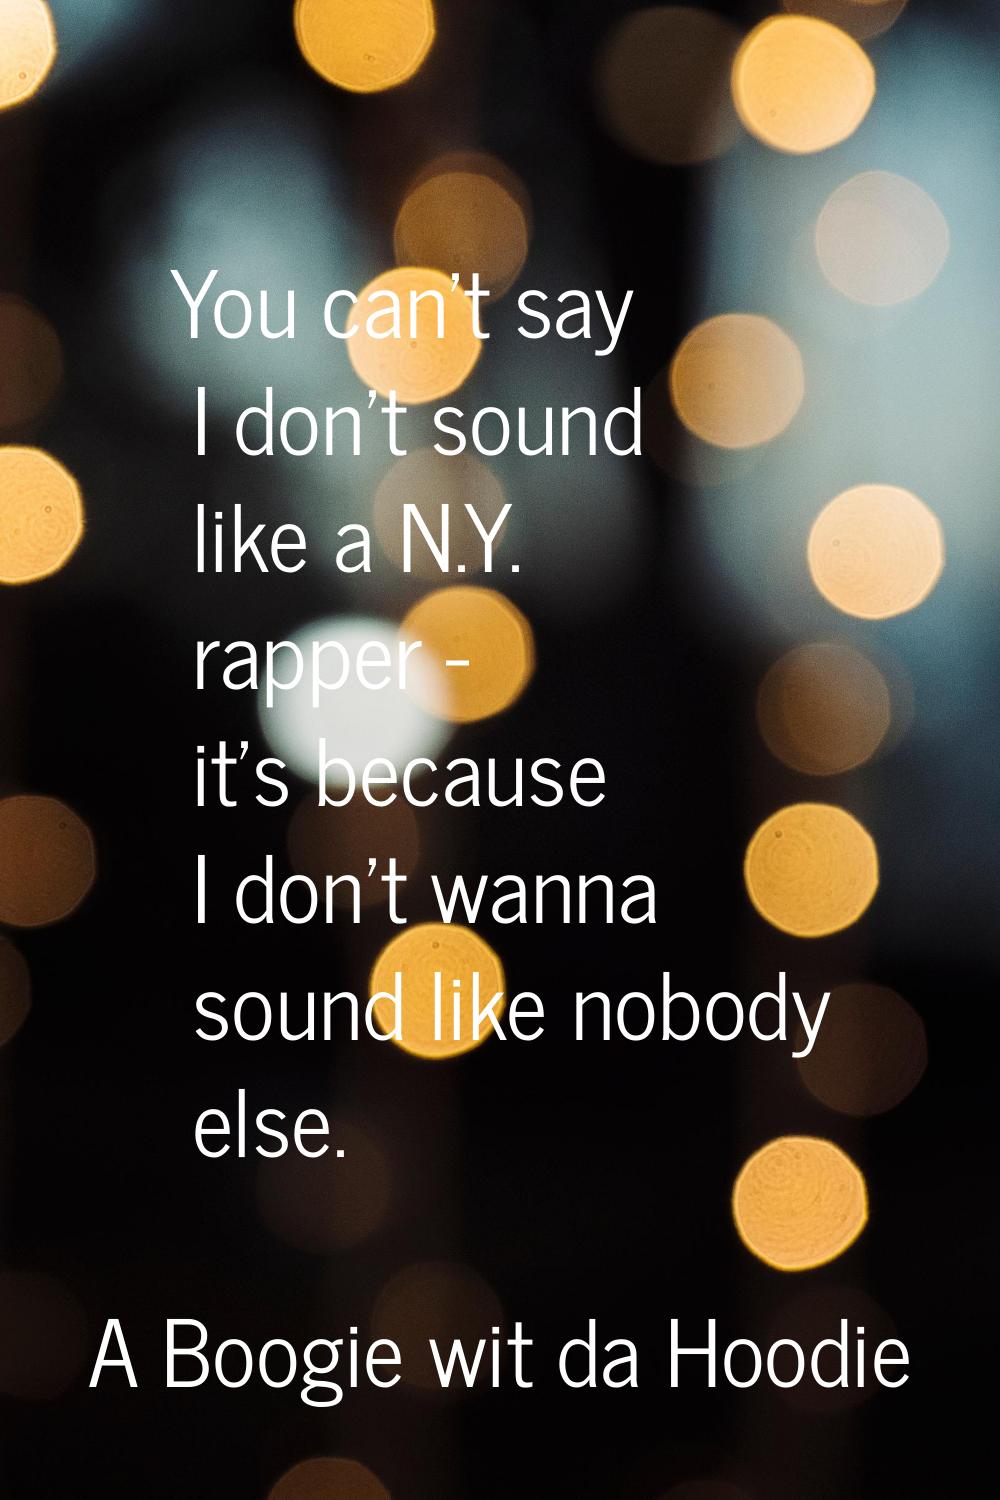 You can't say I don't sound like a N.Y. rapper - it's because I don't wanna sound like nobody else.